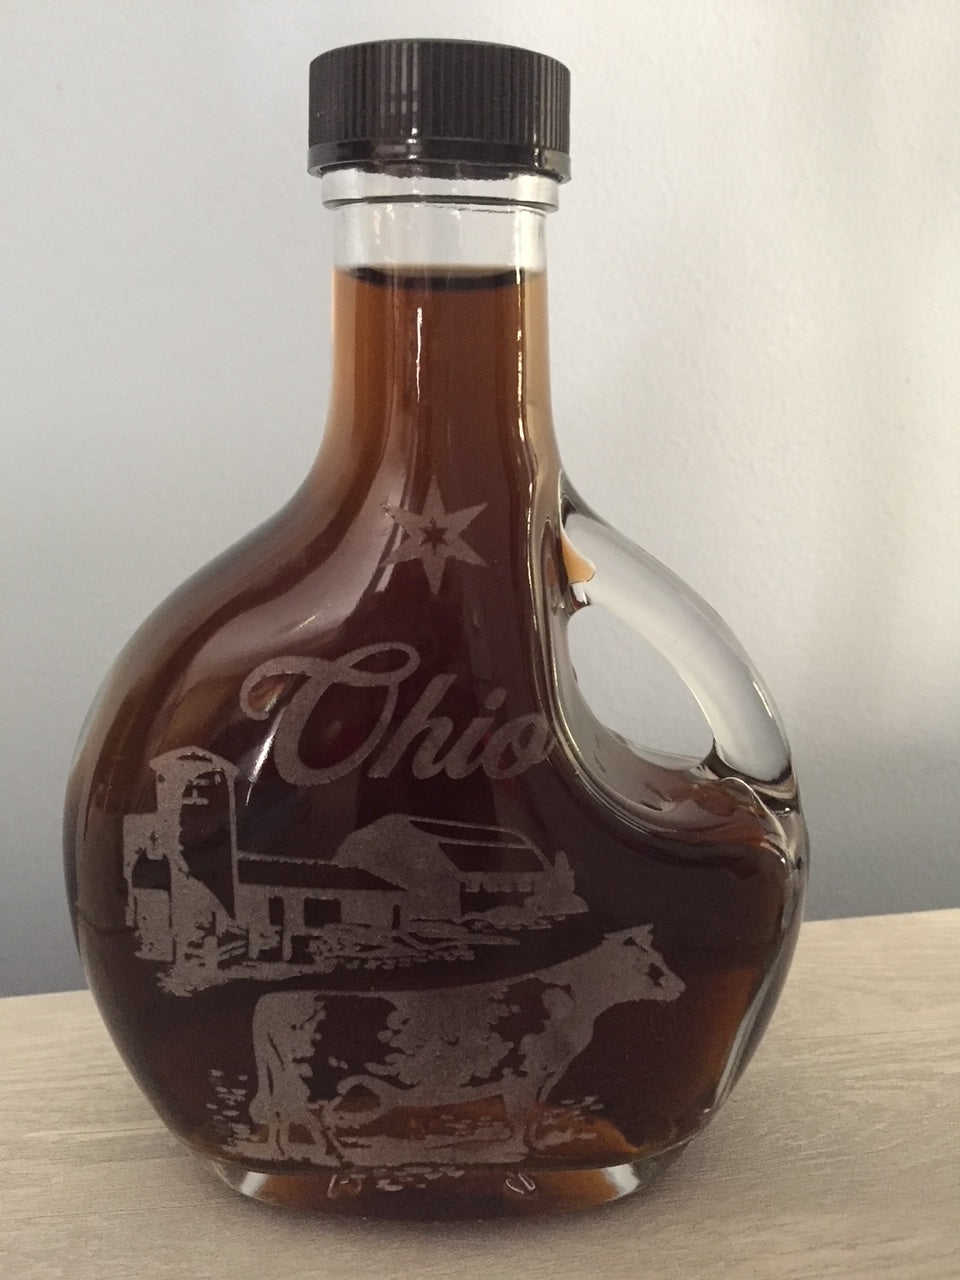 Ohio Classic Farm Etched 250ml Bottle